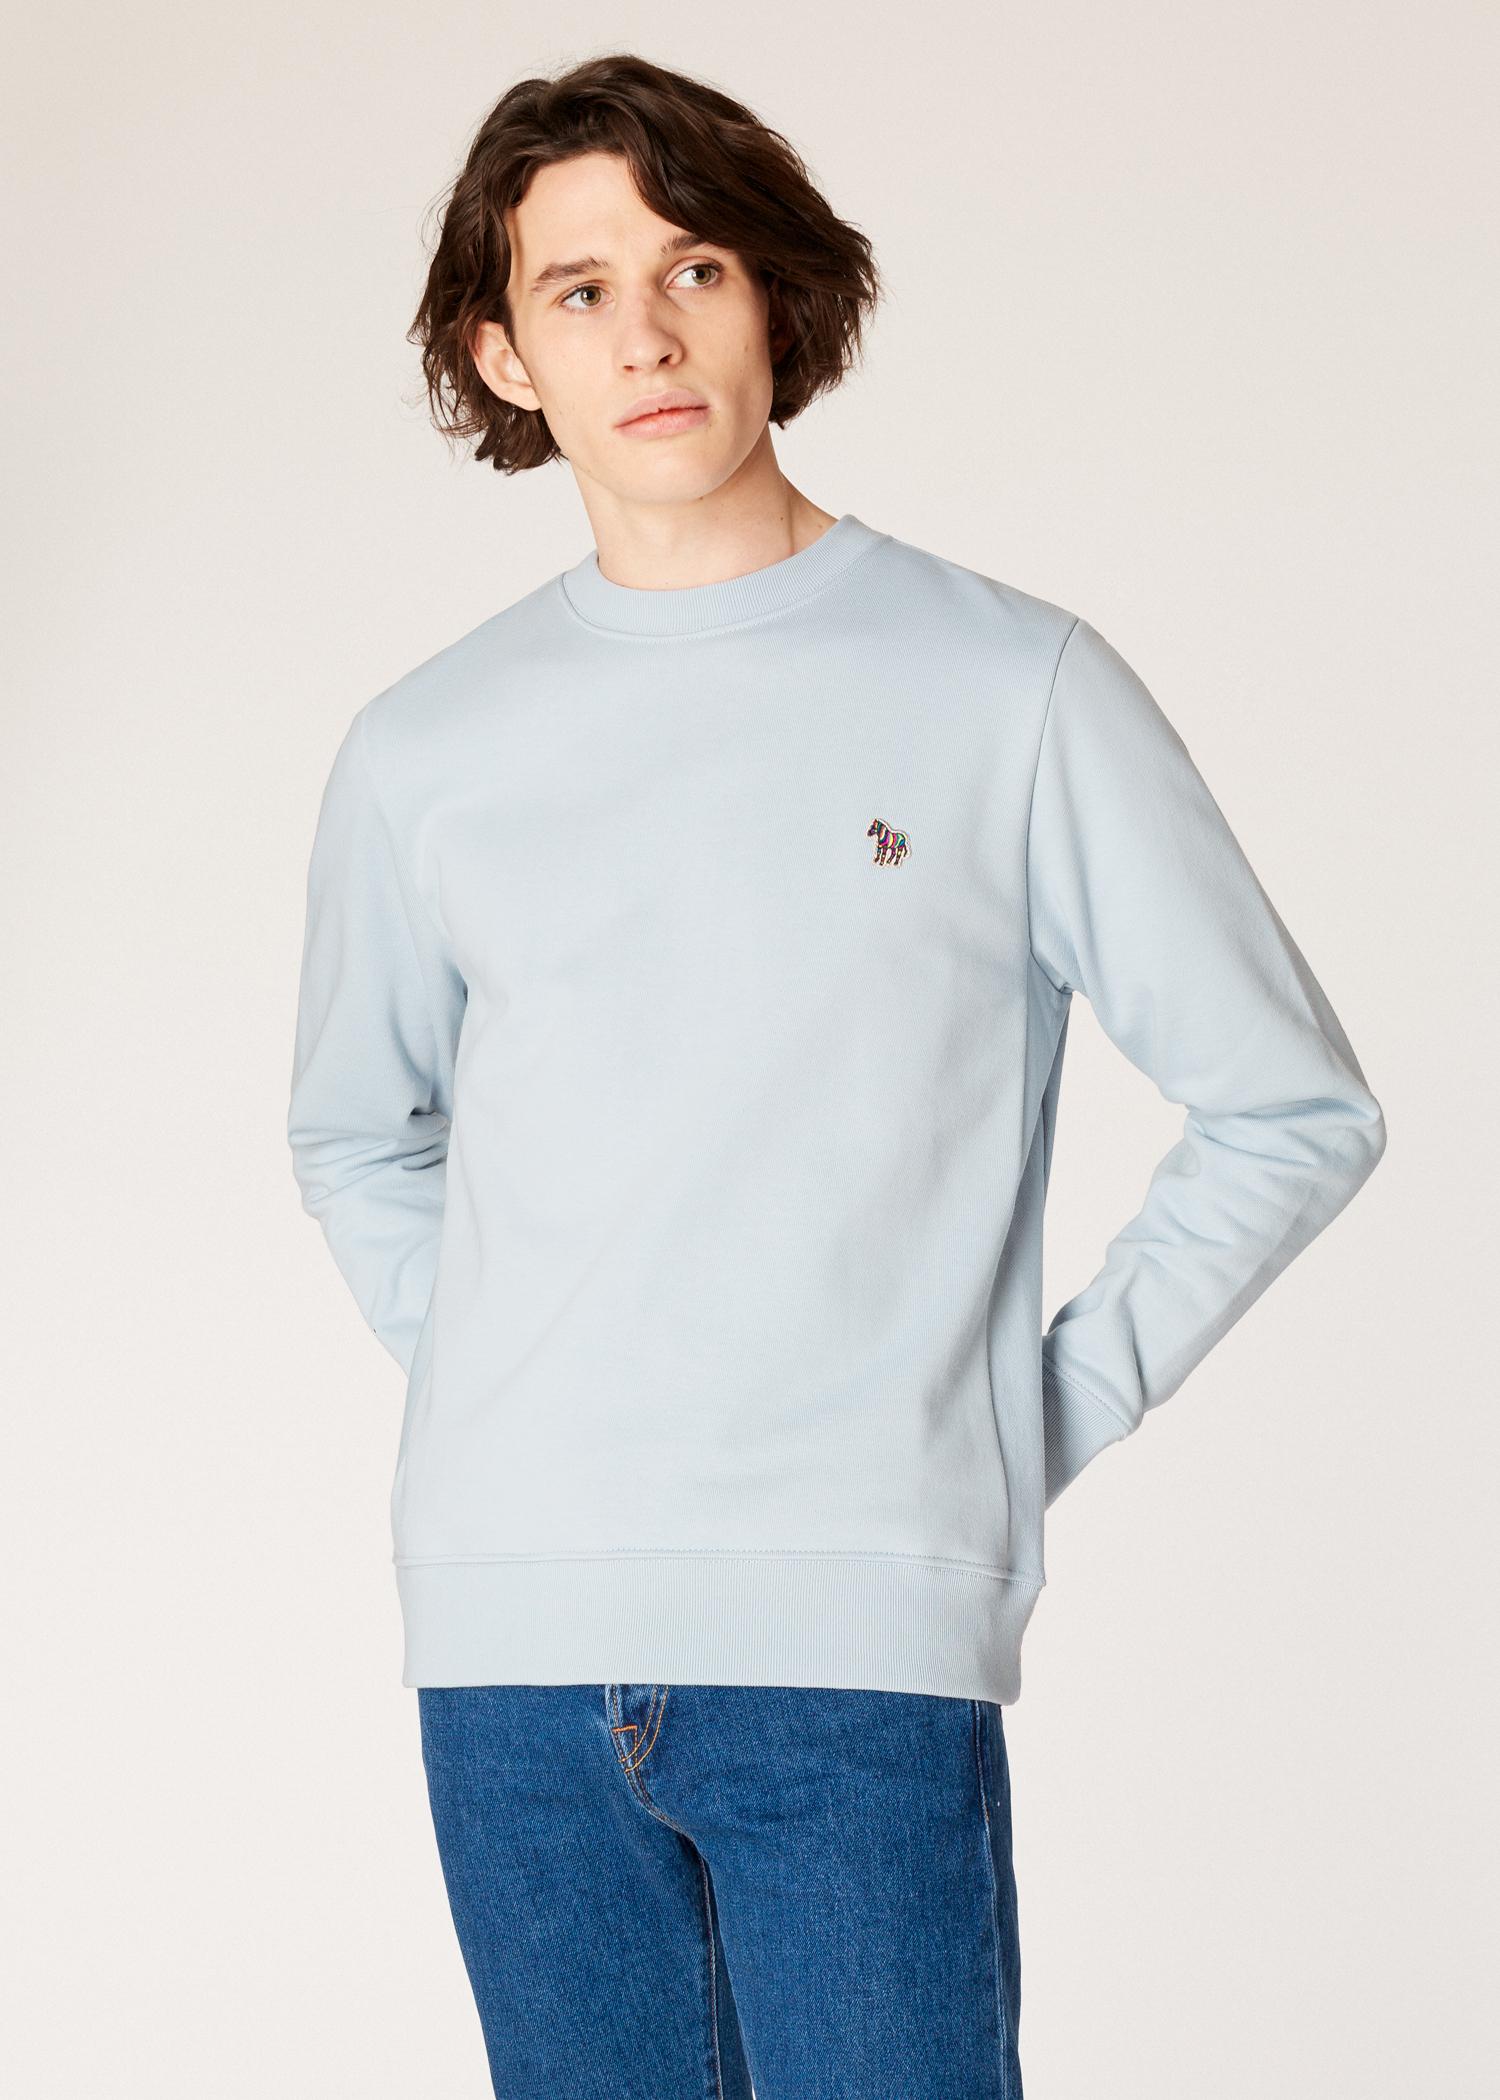 Paul Smith Light Blue Organic-cotton Zebra Logo Sweatshirt for Men - Lyst